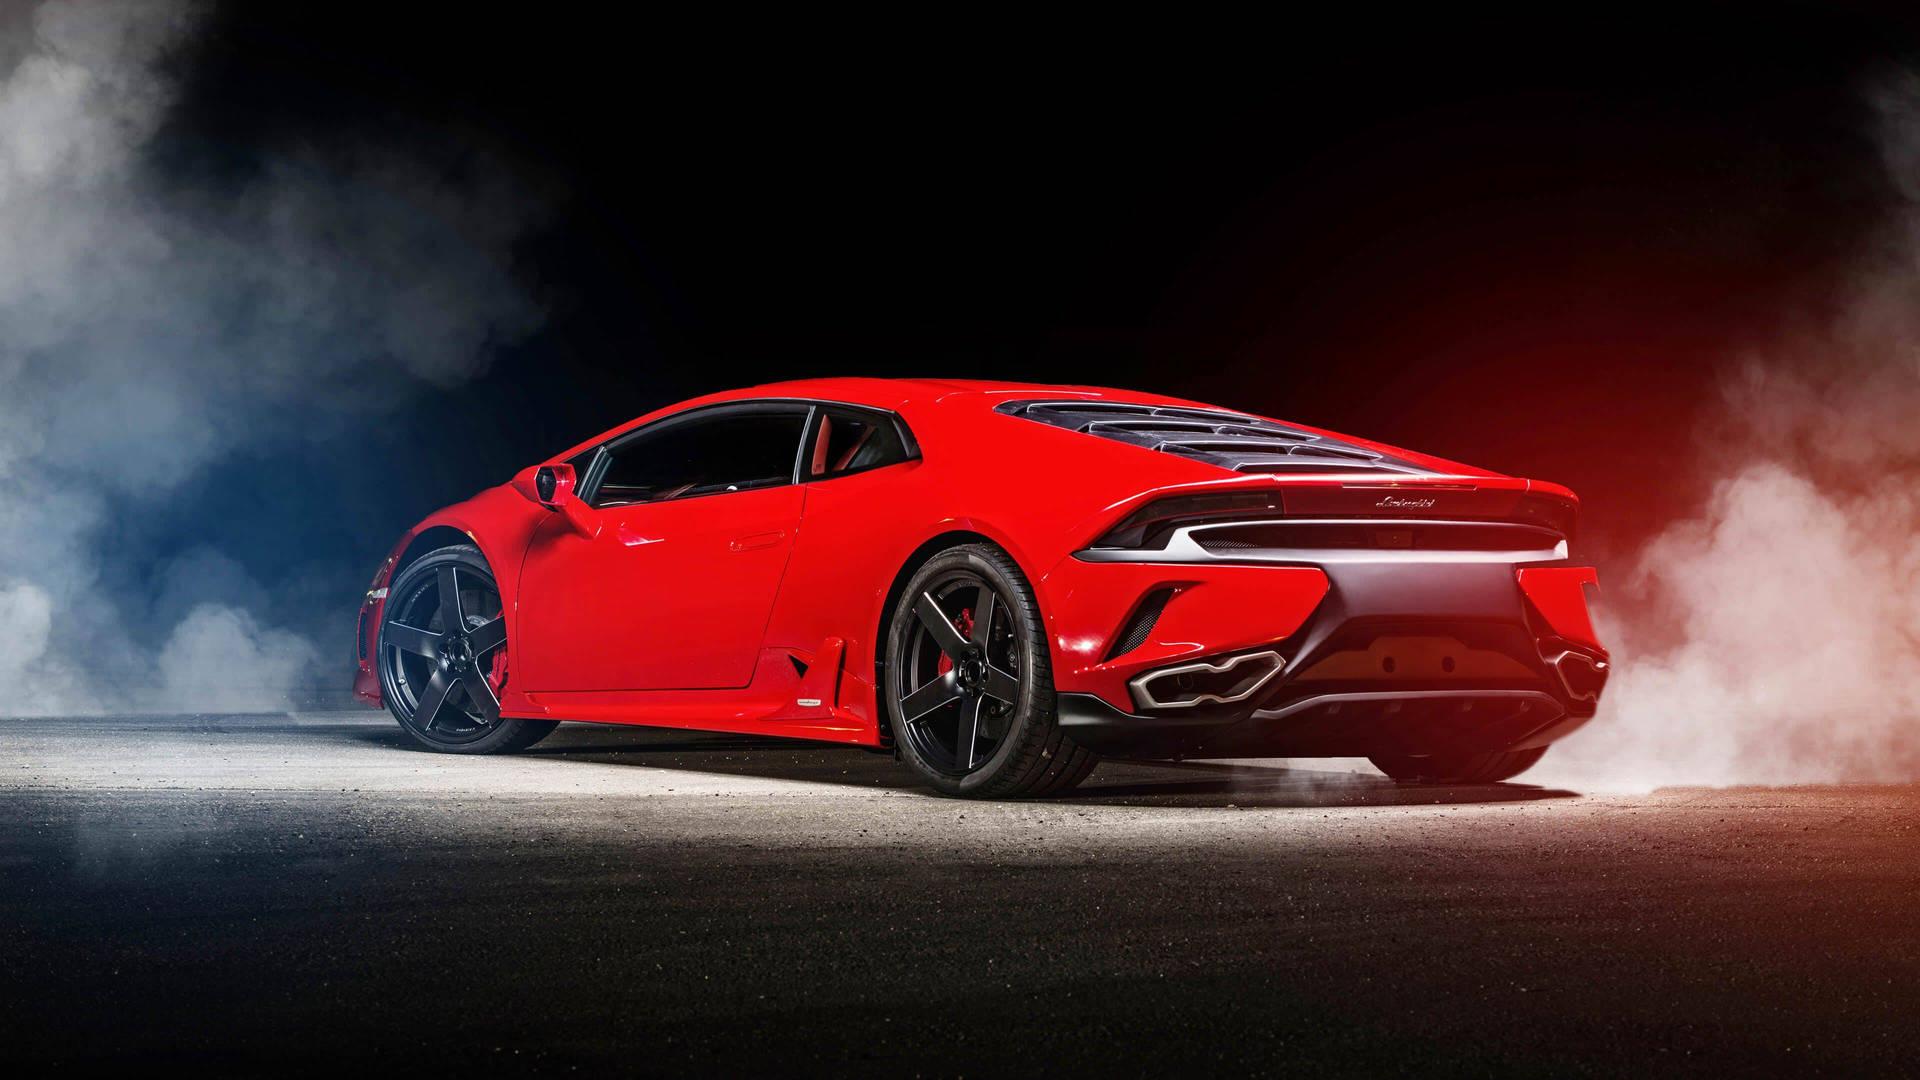 Cooleautos: Rauchender Roter Lamborghini Wallpaper